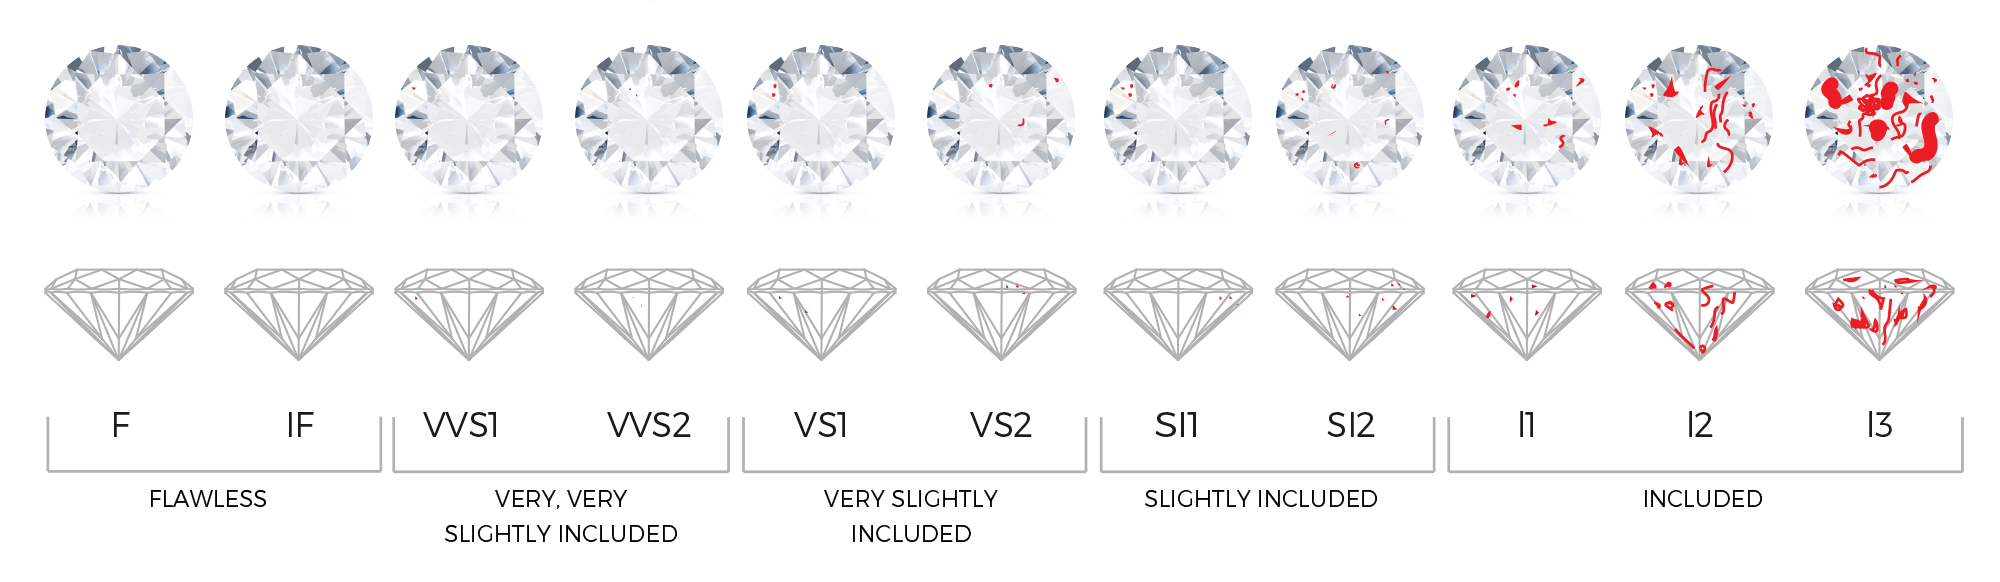 Clarity | The Diamond Trust